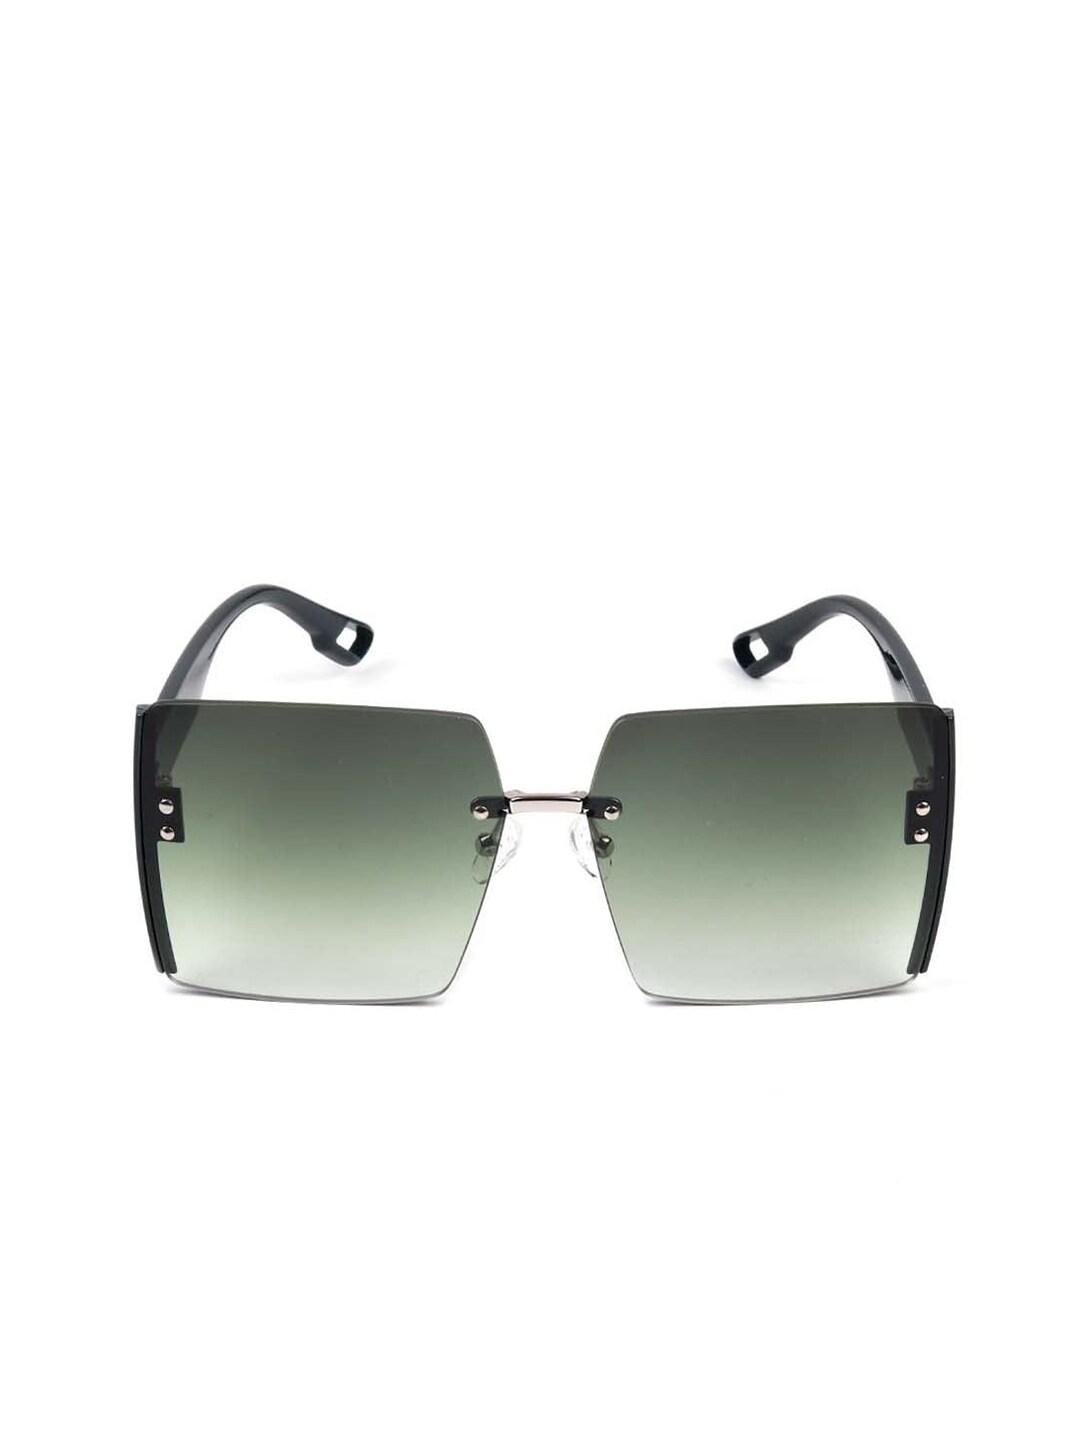 odette-women-lens-&-oversized-sunglasses-with-uv-protected-lens-new156